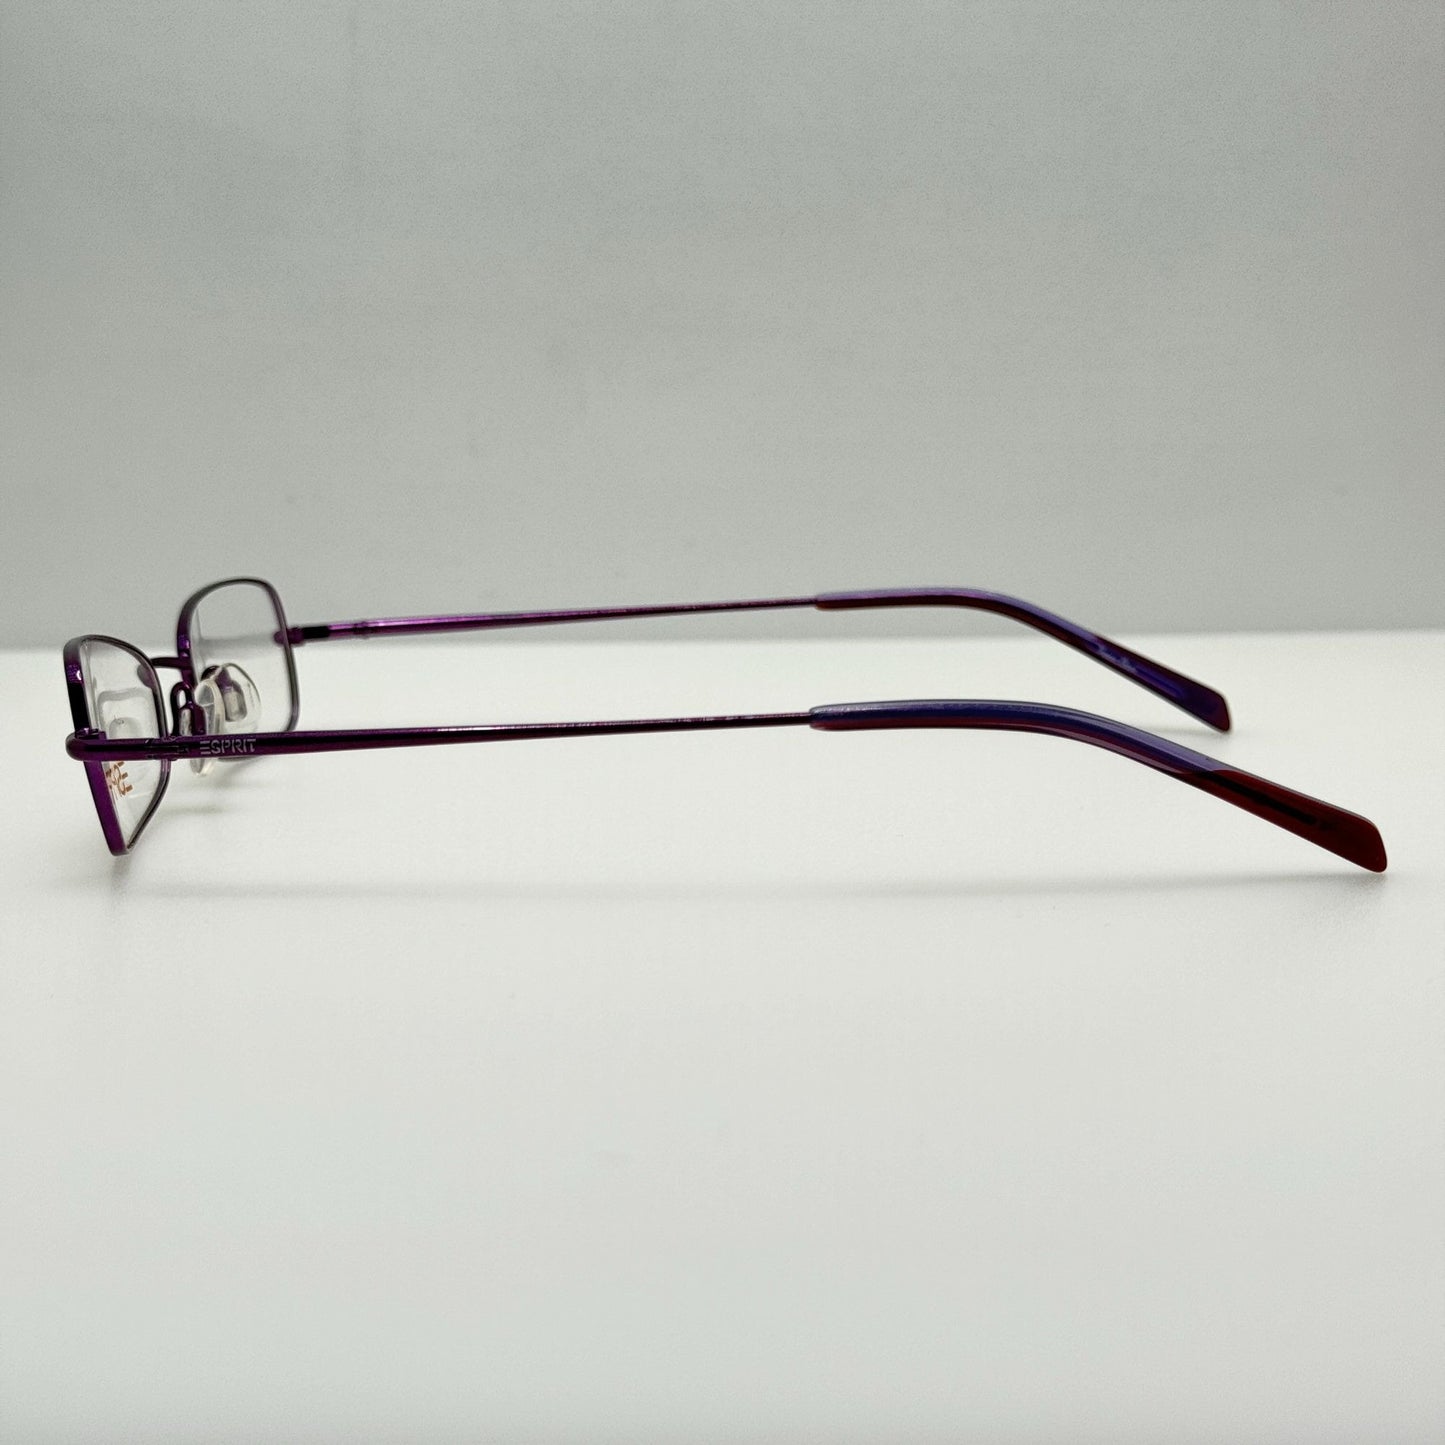 Esprit Eyeglasses Eye Glasses Frames 9226 033 48-18-140